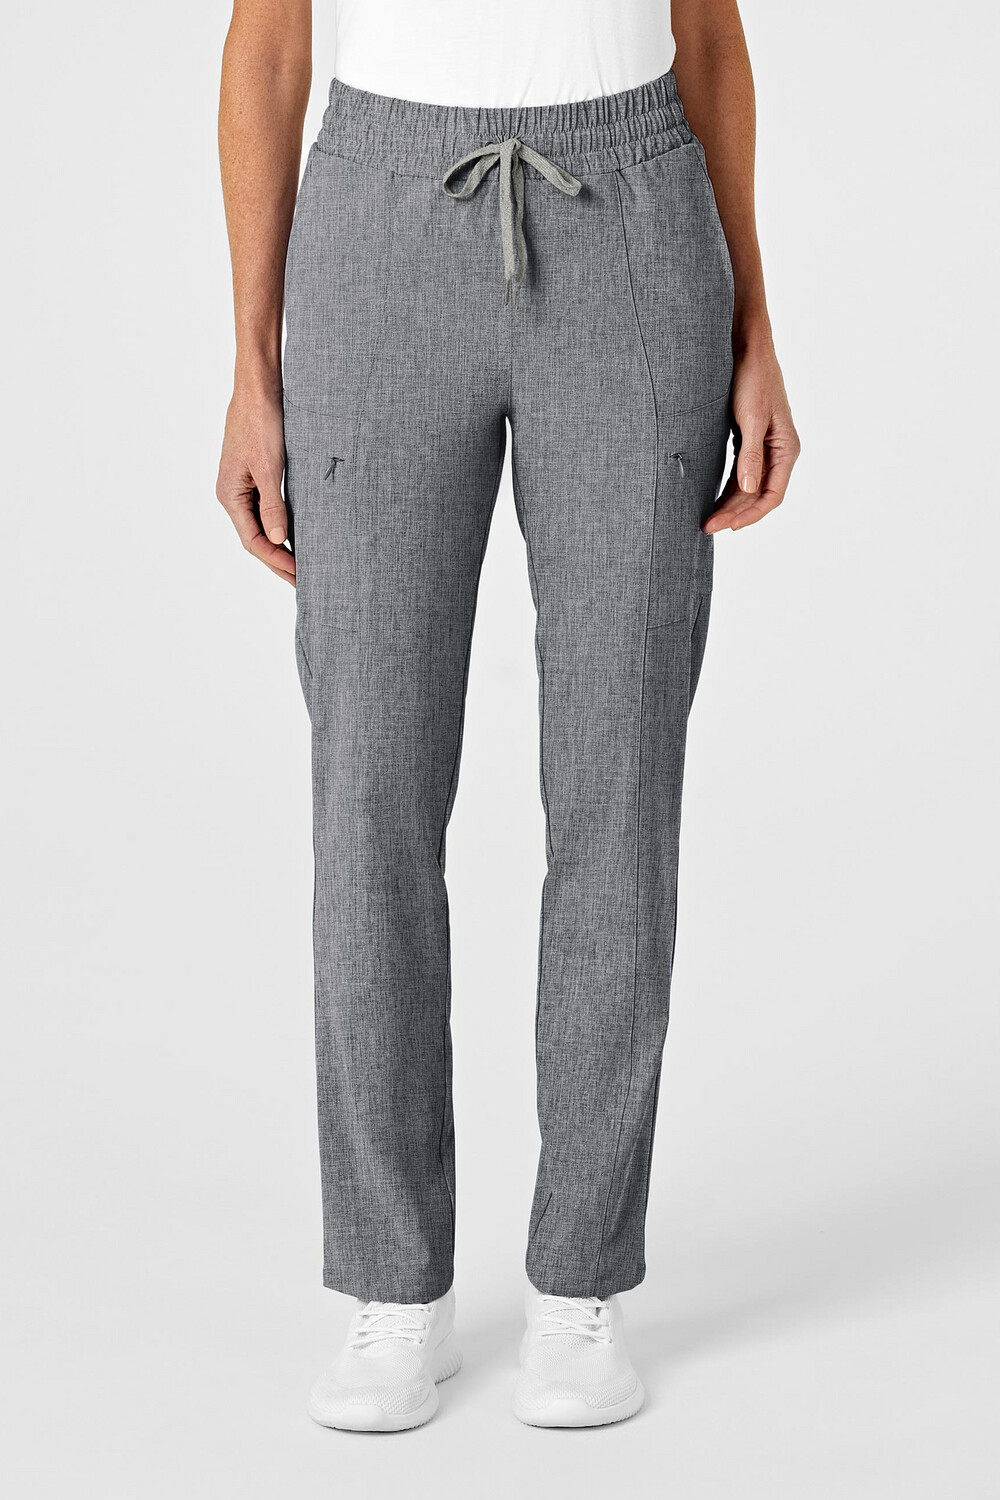 Pantalone donna 5334 grey heather